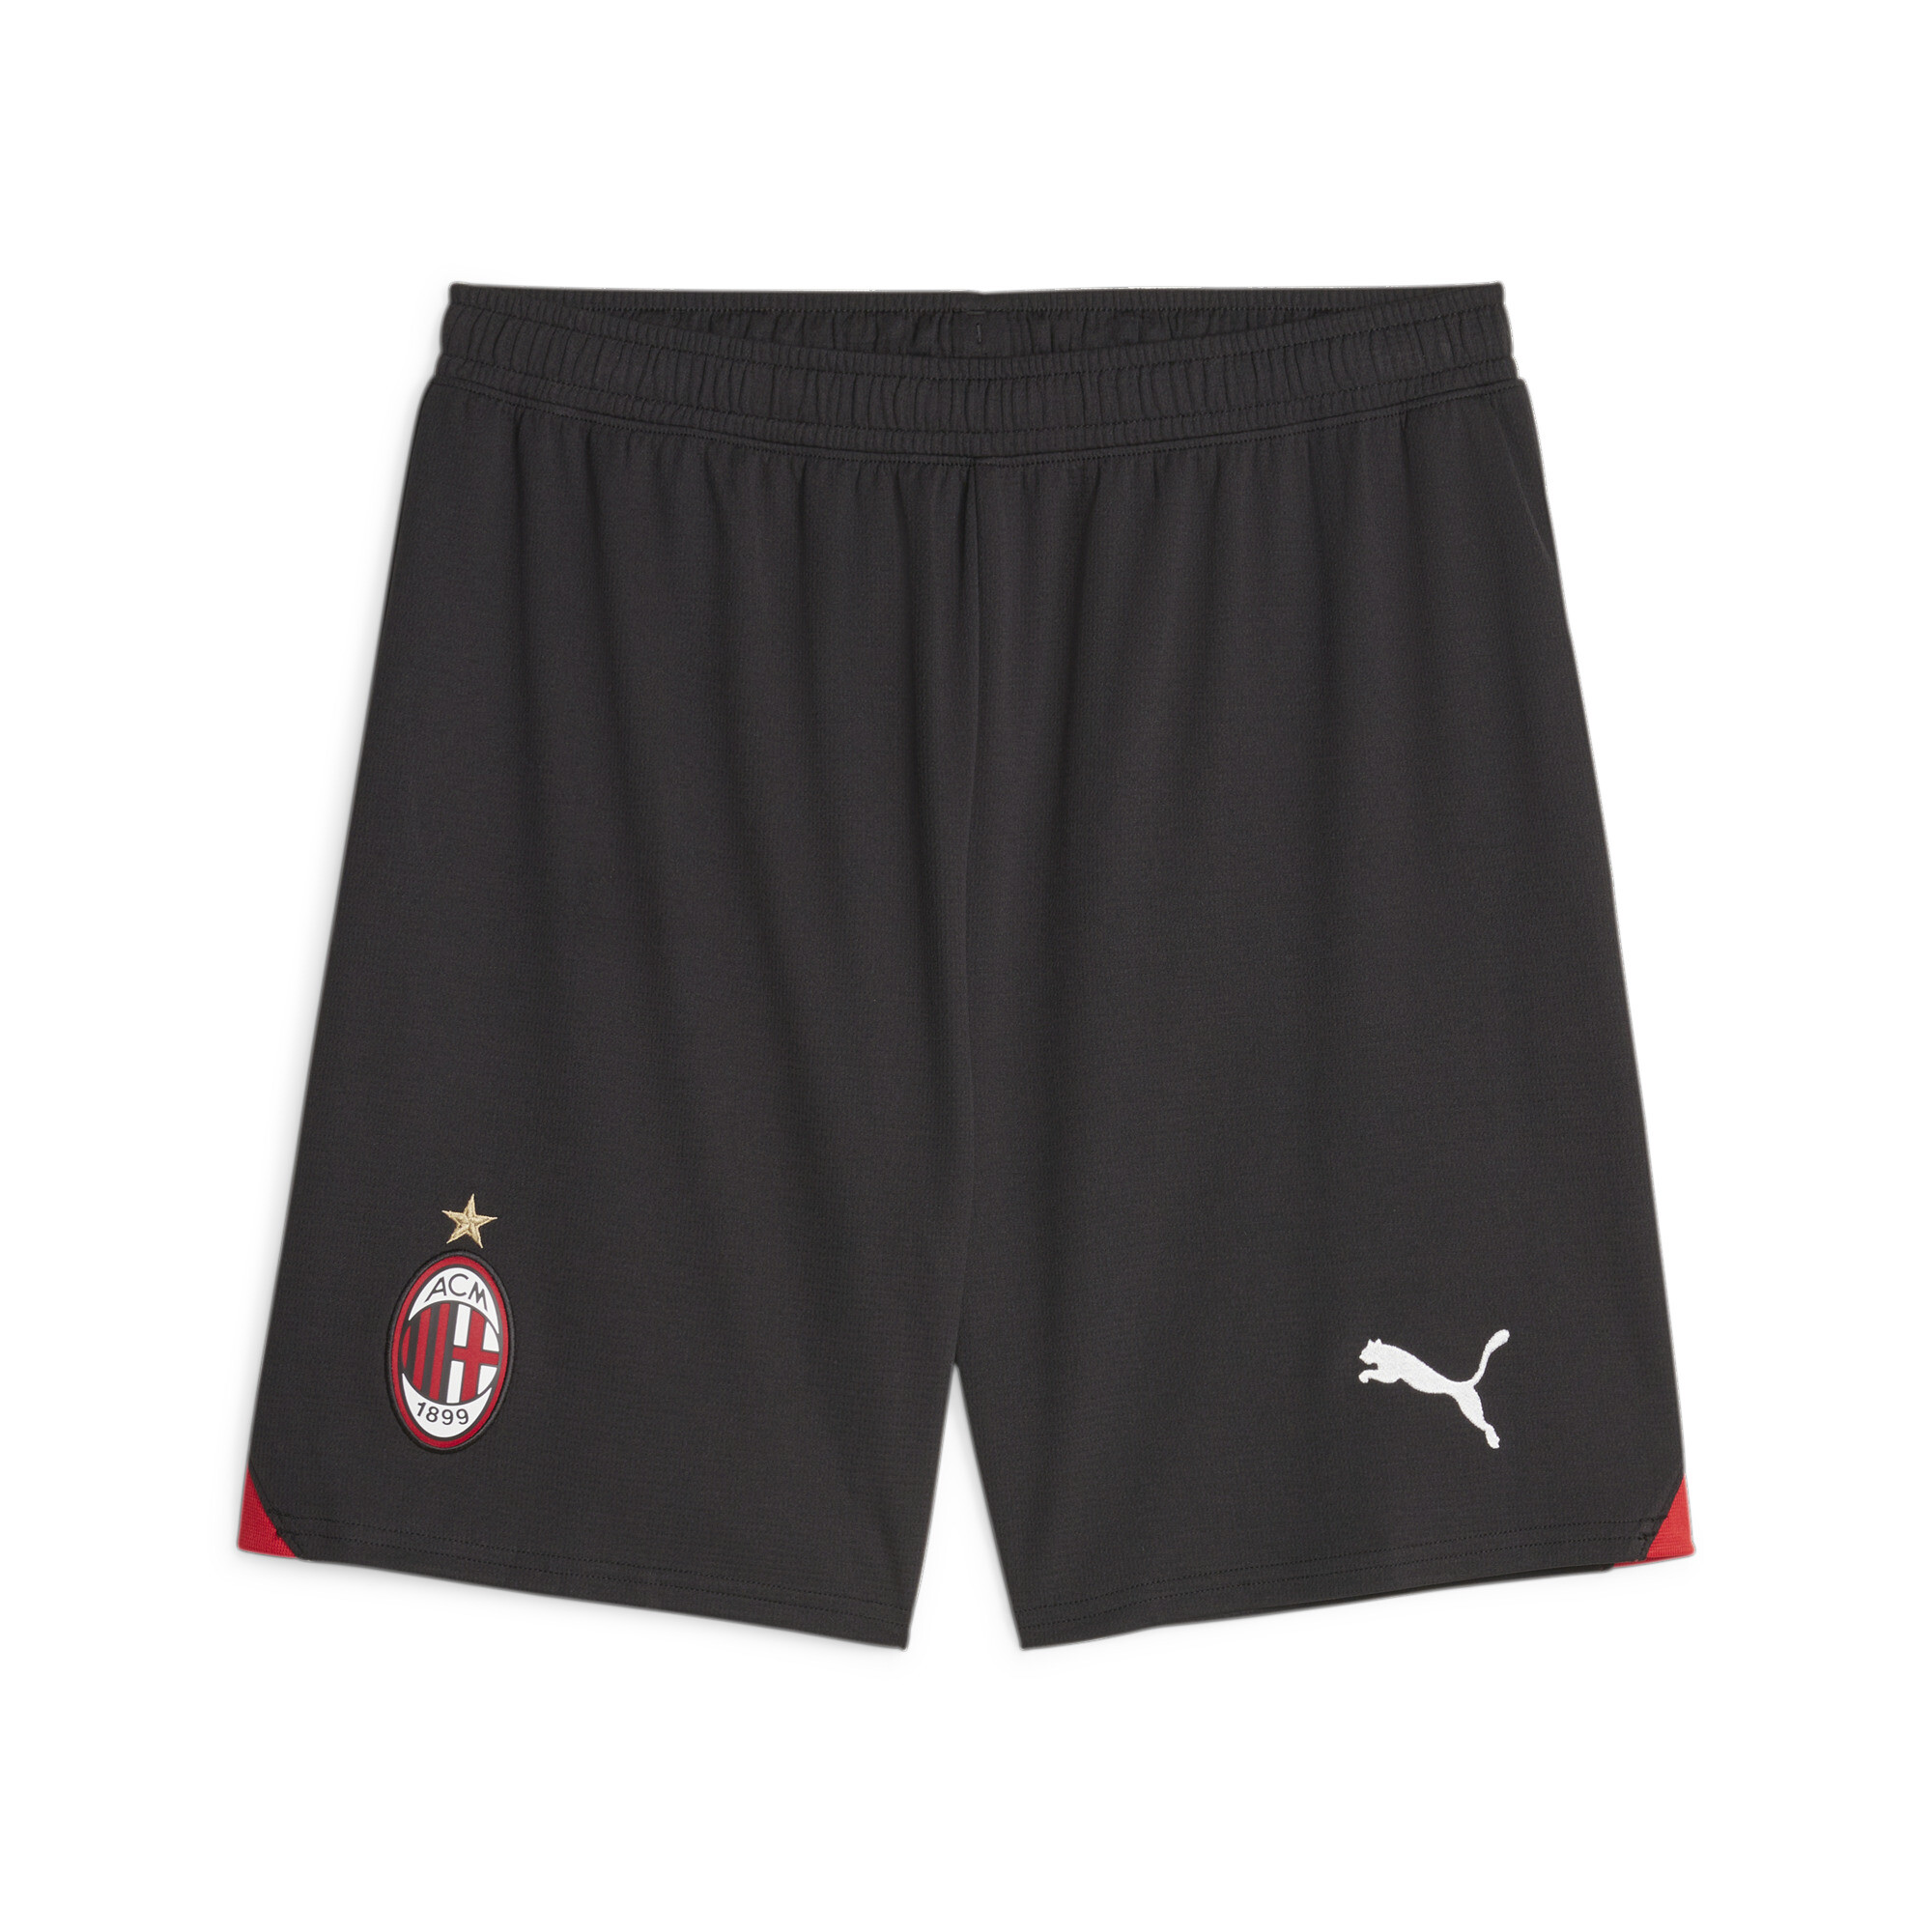 Men's PUMA AC Milan Football Shorts In Black, Size Small